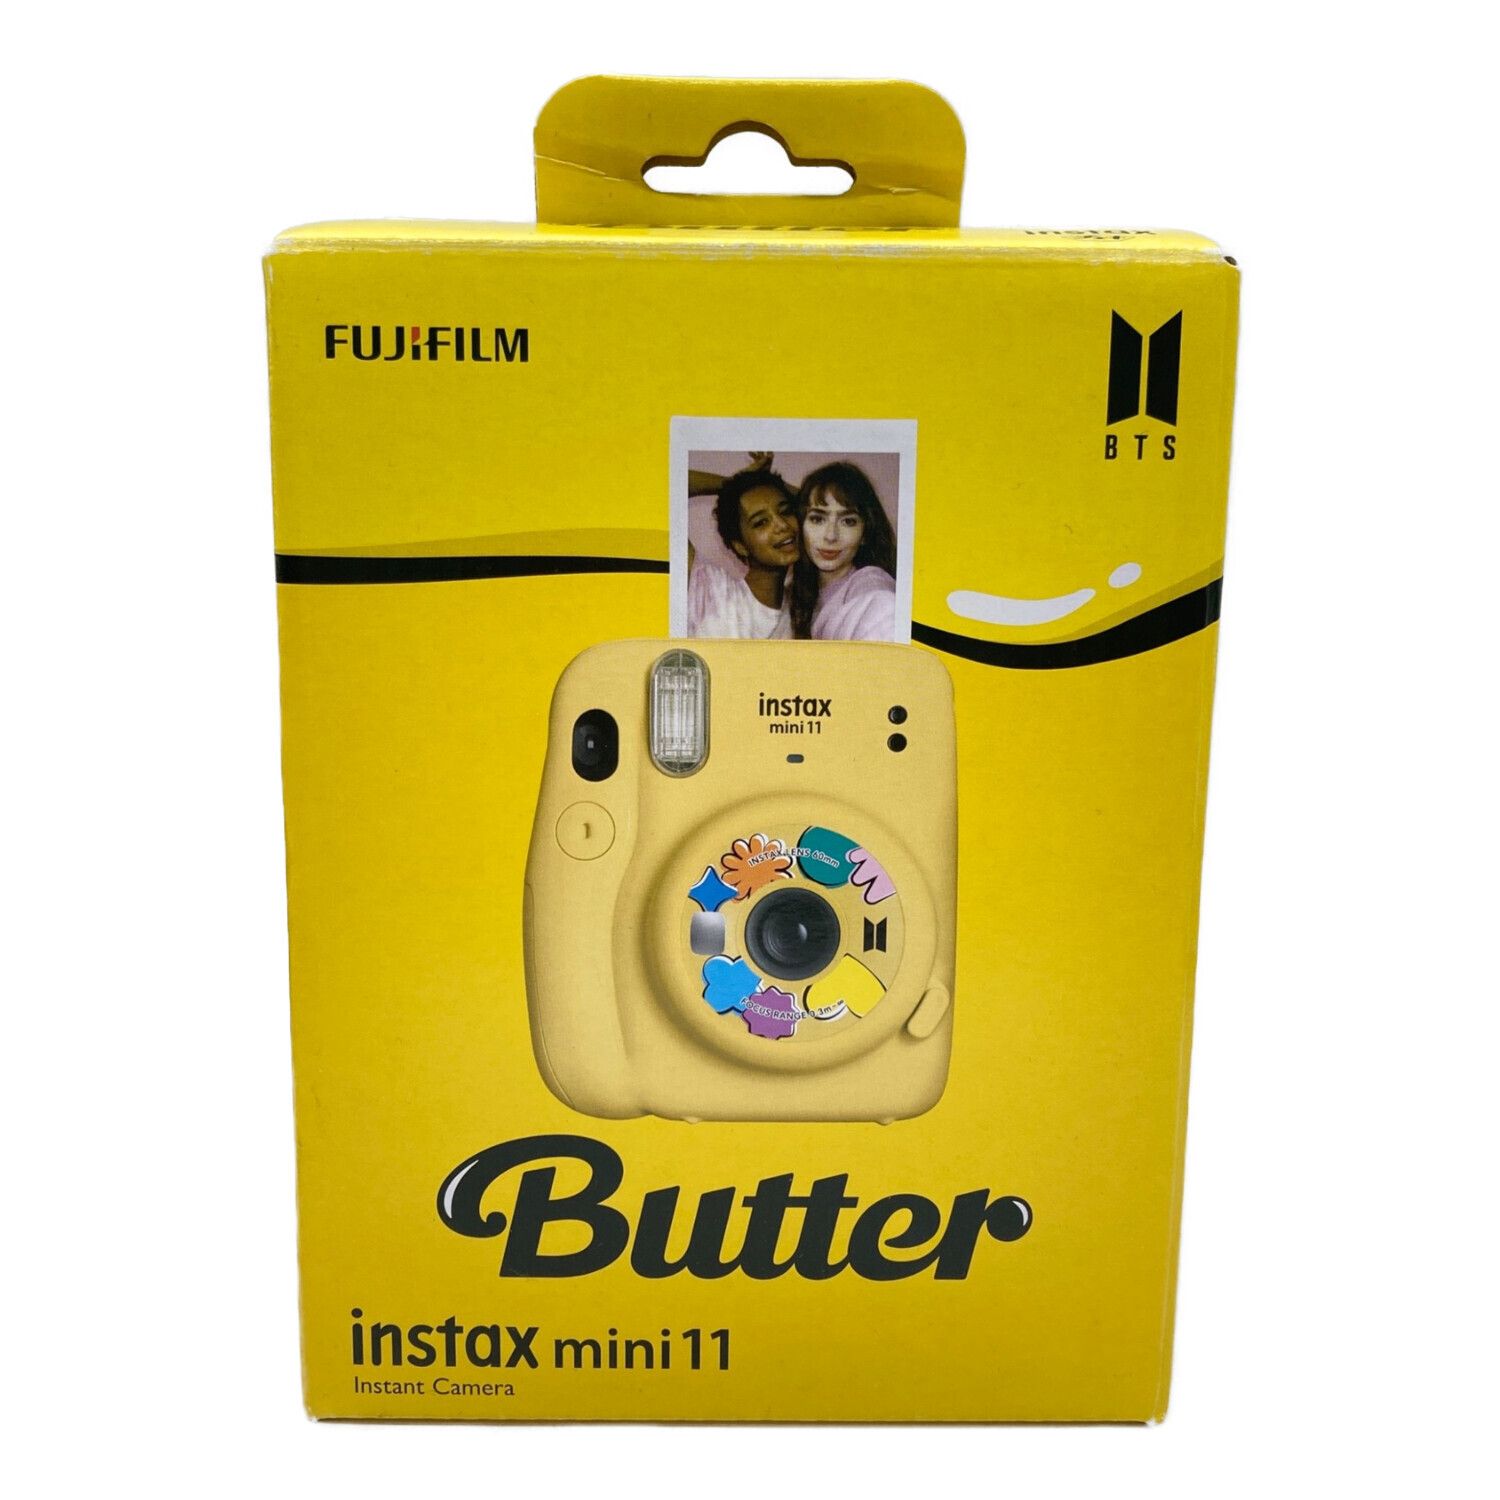 BTS instax mini11 チェキ Butter - フィルムカメラ